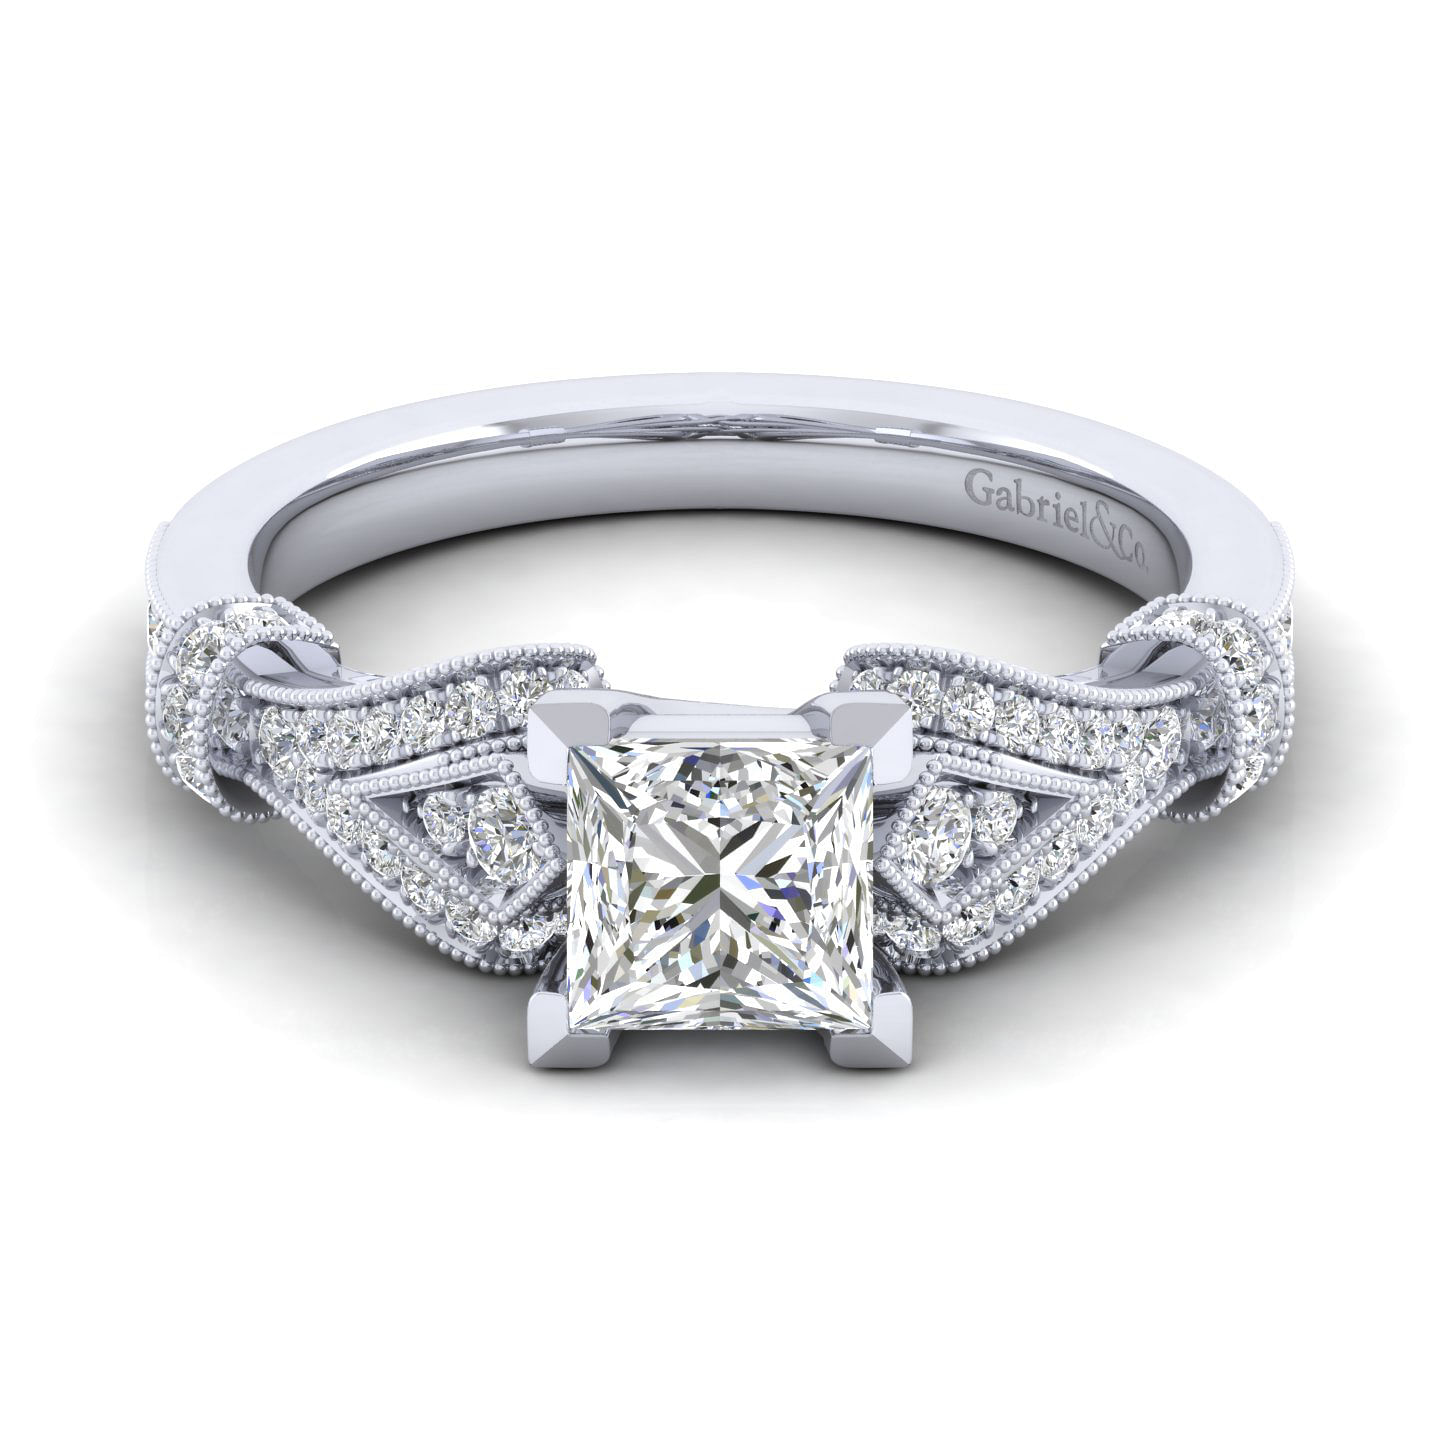 Lucille - Vintage Inspired 14K White Gold Split Shank Princess Cut Diamond Engagement Ring